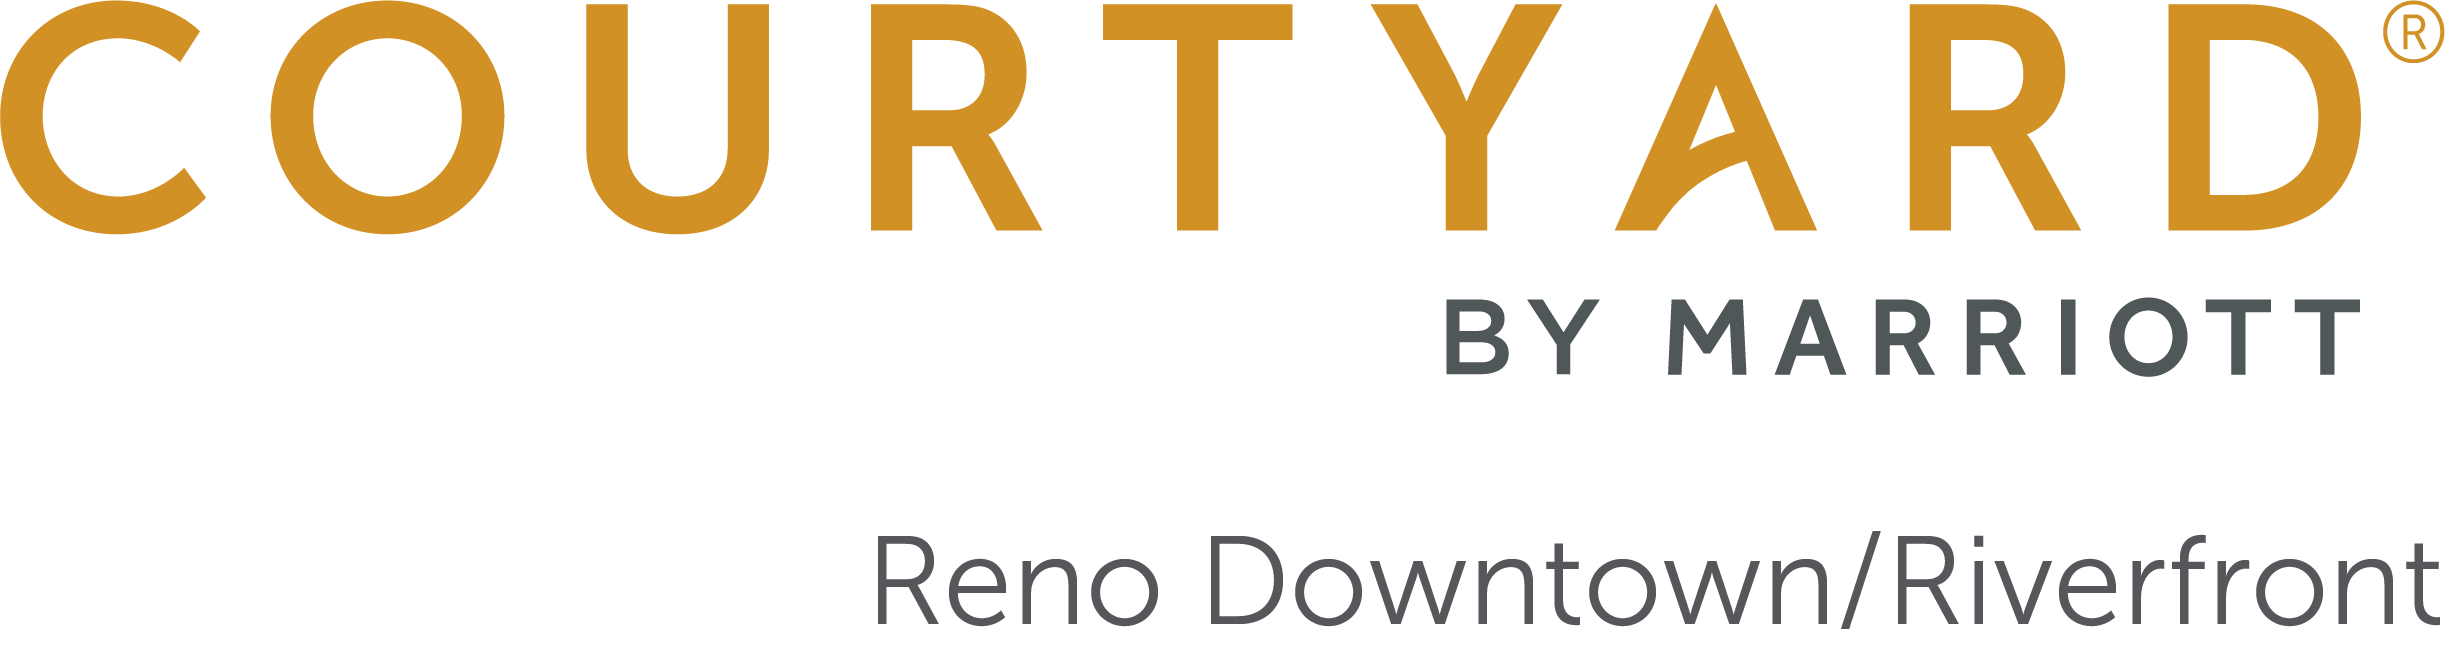 Courtyard By Marriott Reno Downtown Riverfront Logo